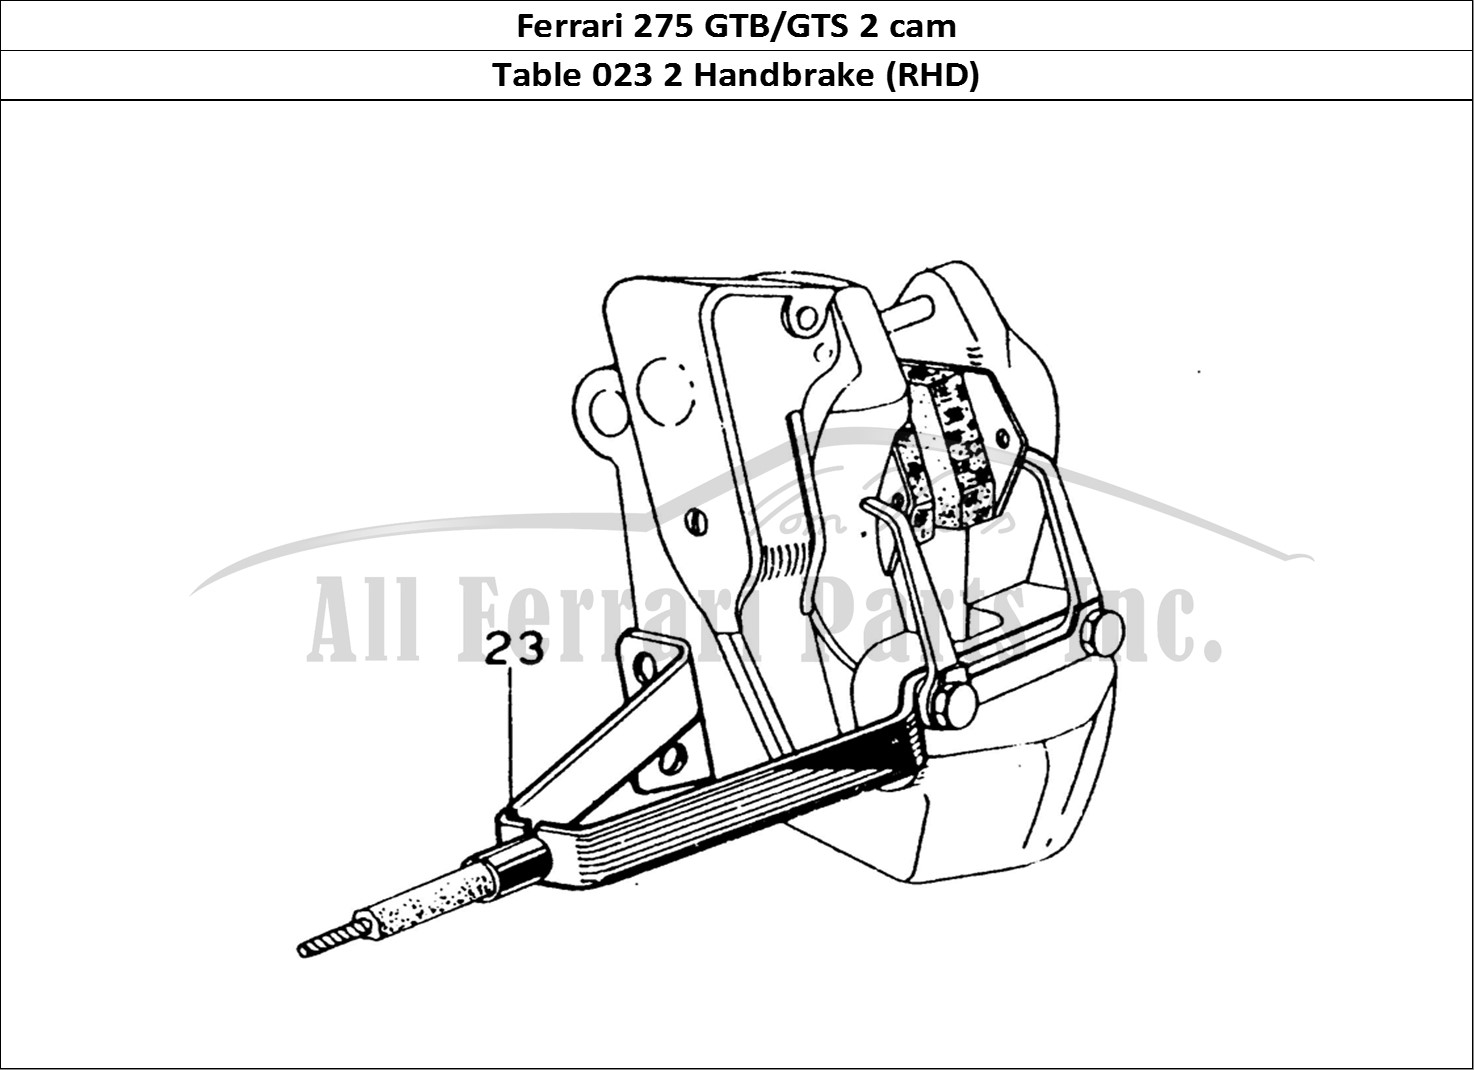 Ferrari Parts Ferrari 275 GTB/GTS 2 cam Page 023 Brake System - (RHD) Hand